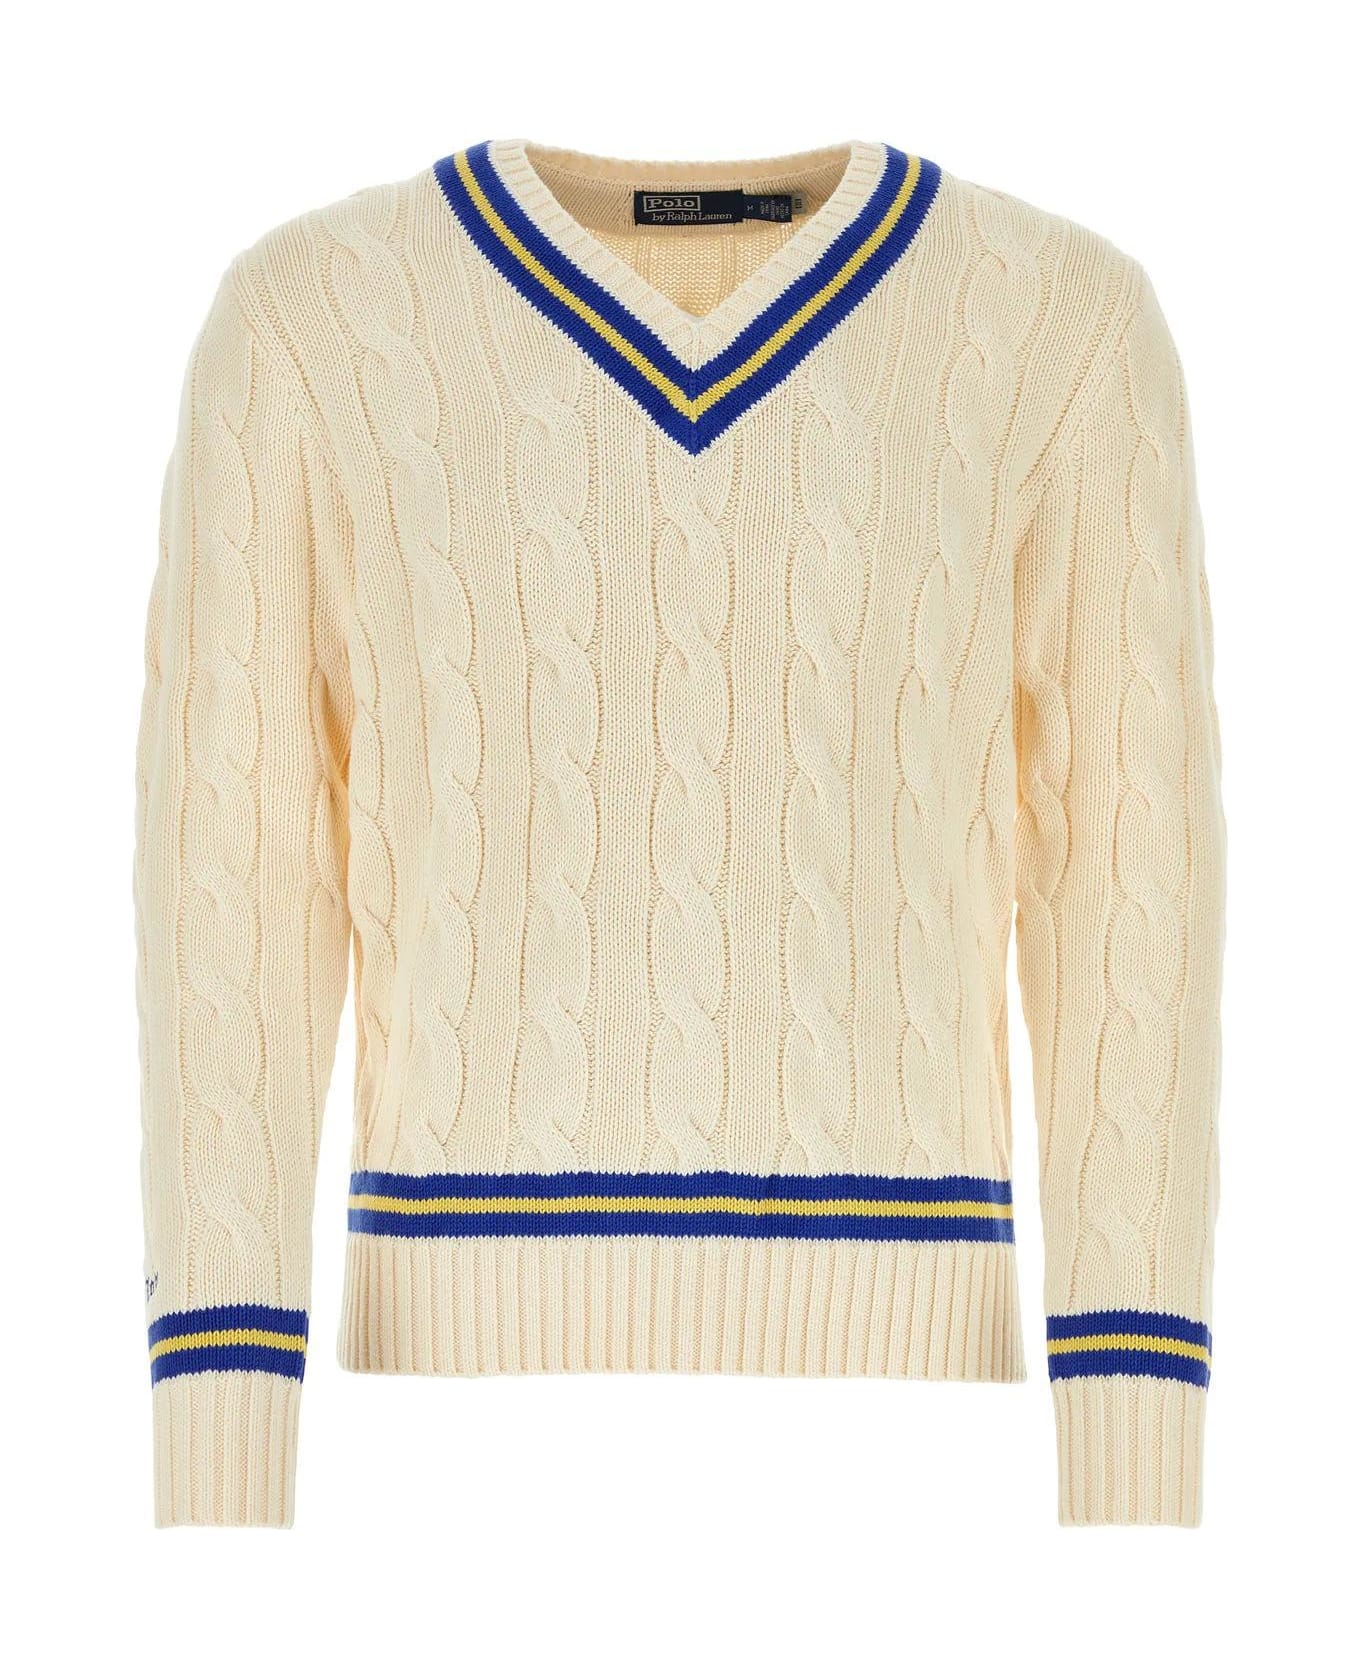 Ralph Lauren Cream Cotton Sweater - CREAM